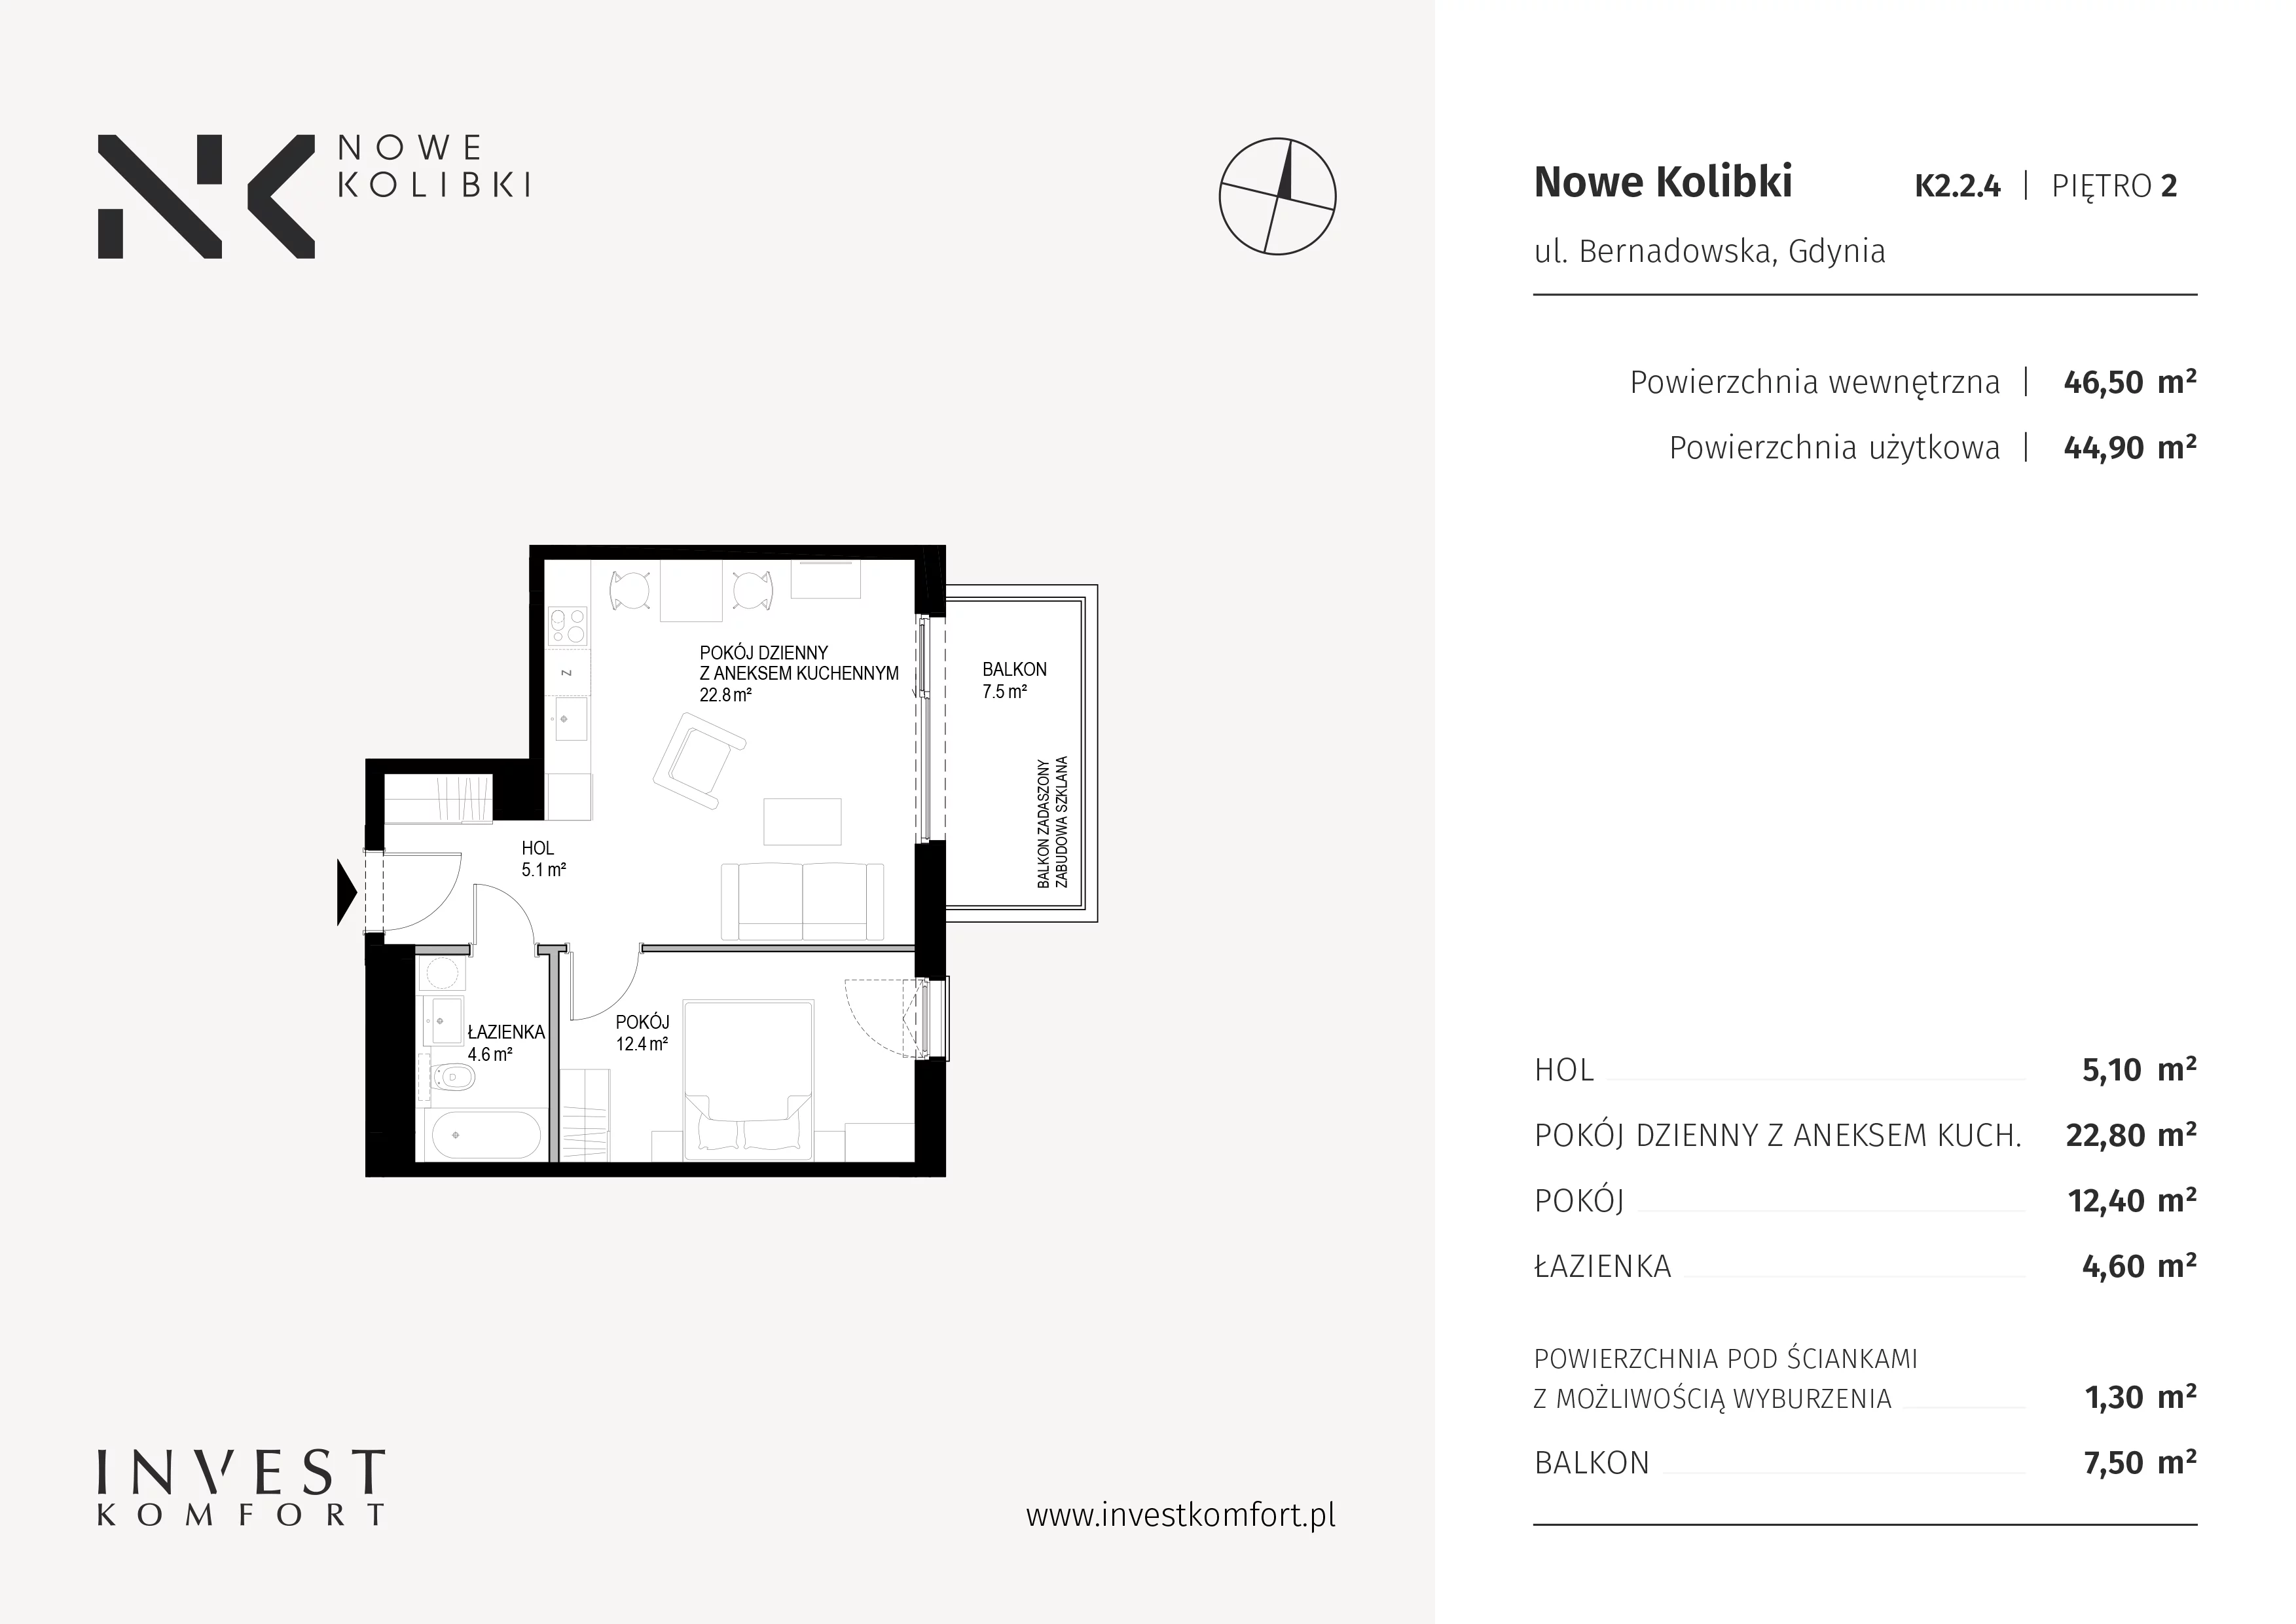 Apartament 46,50 m², piętro 2, oferta nr K2.2.4, Nowe Kolibki, Gdynia, Orłowo, Kolibki, ul. Bernadowska